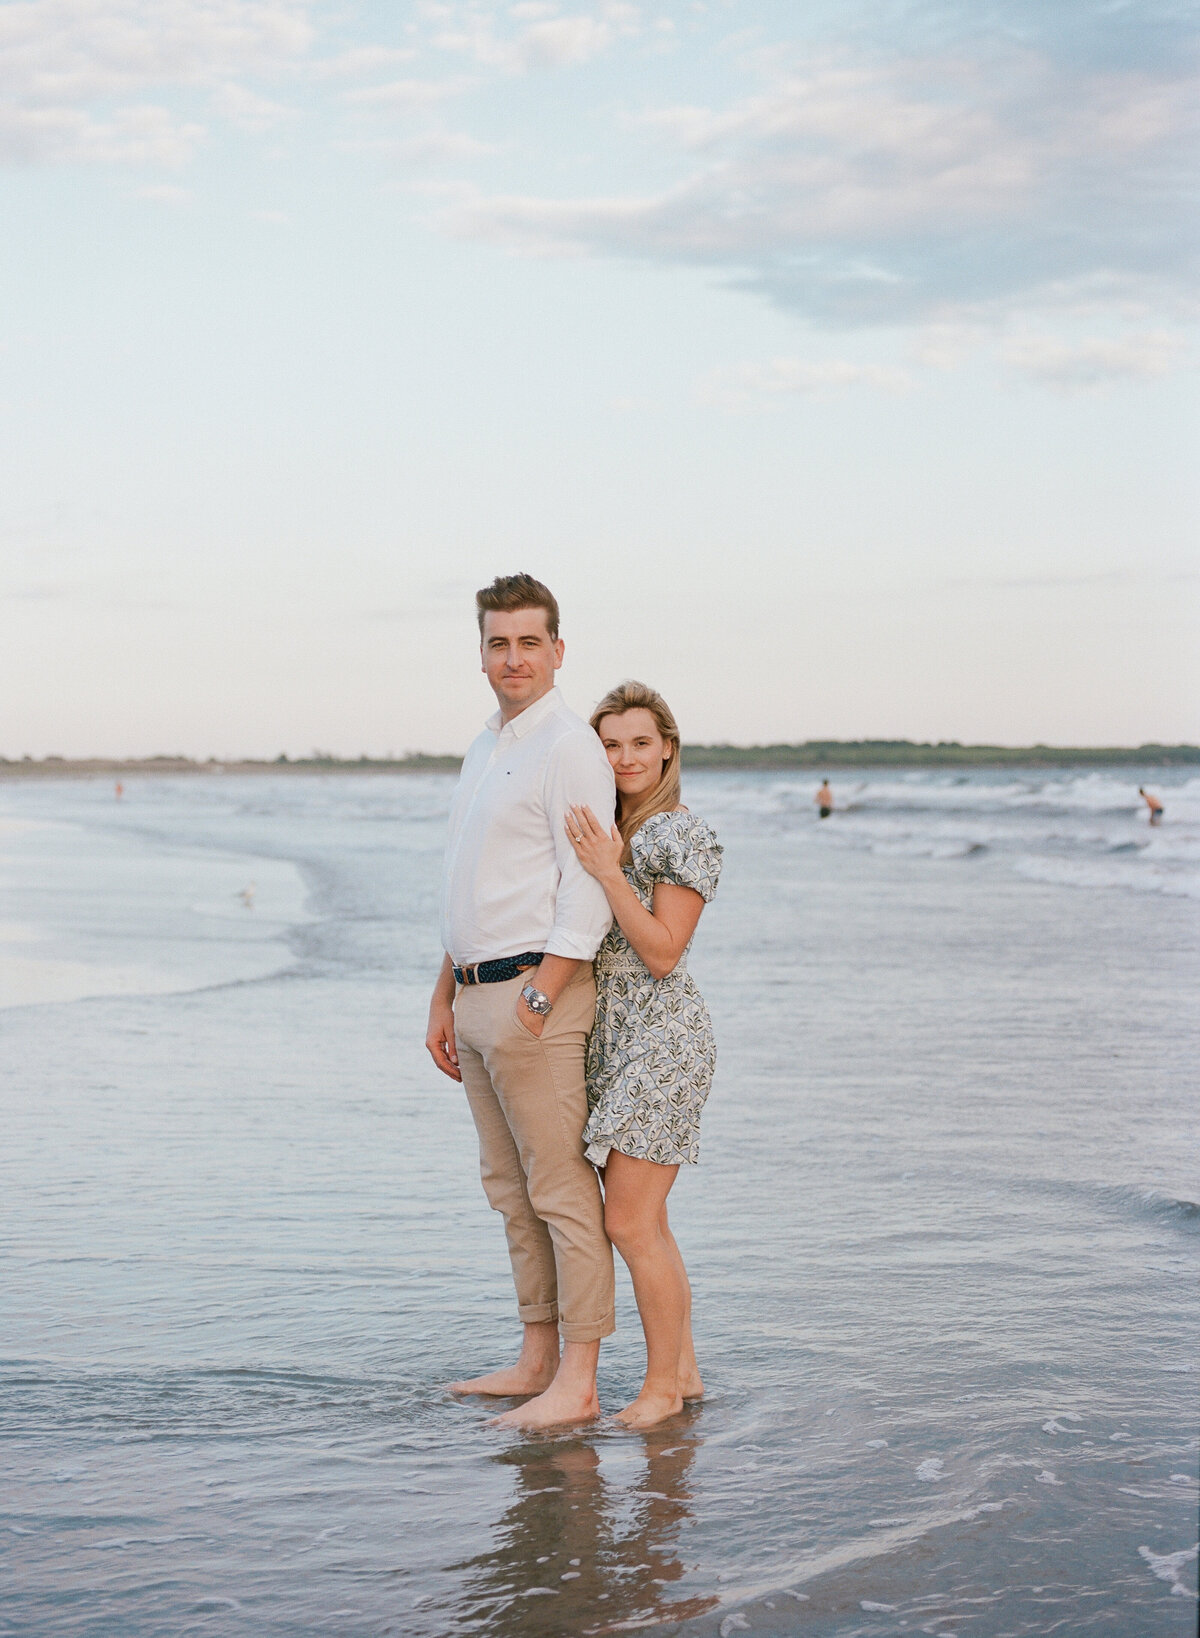 Mackenzie & Sean's RI beach engagement session by Stephanie Vegliante